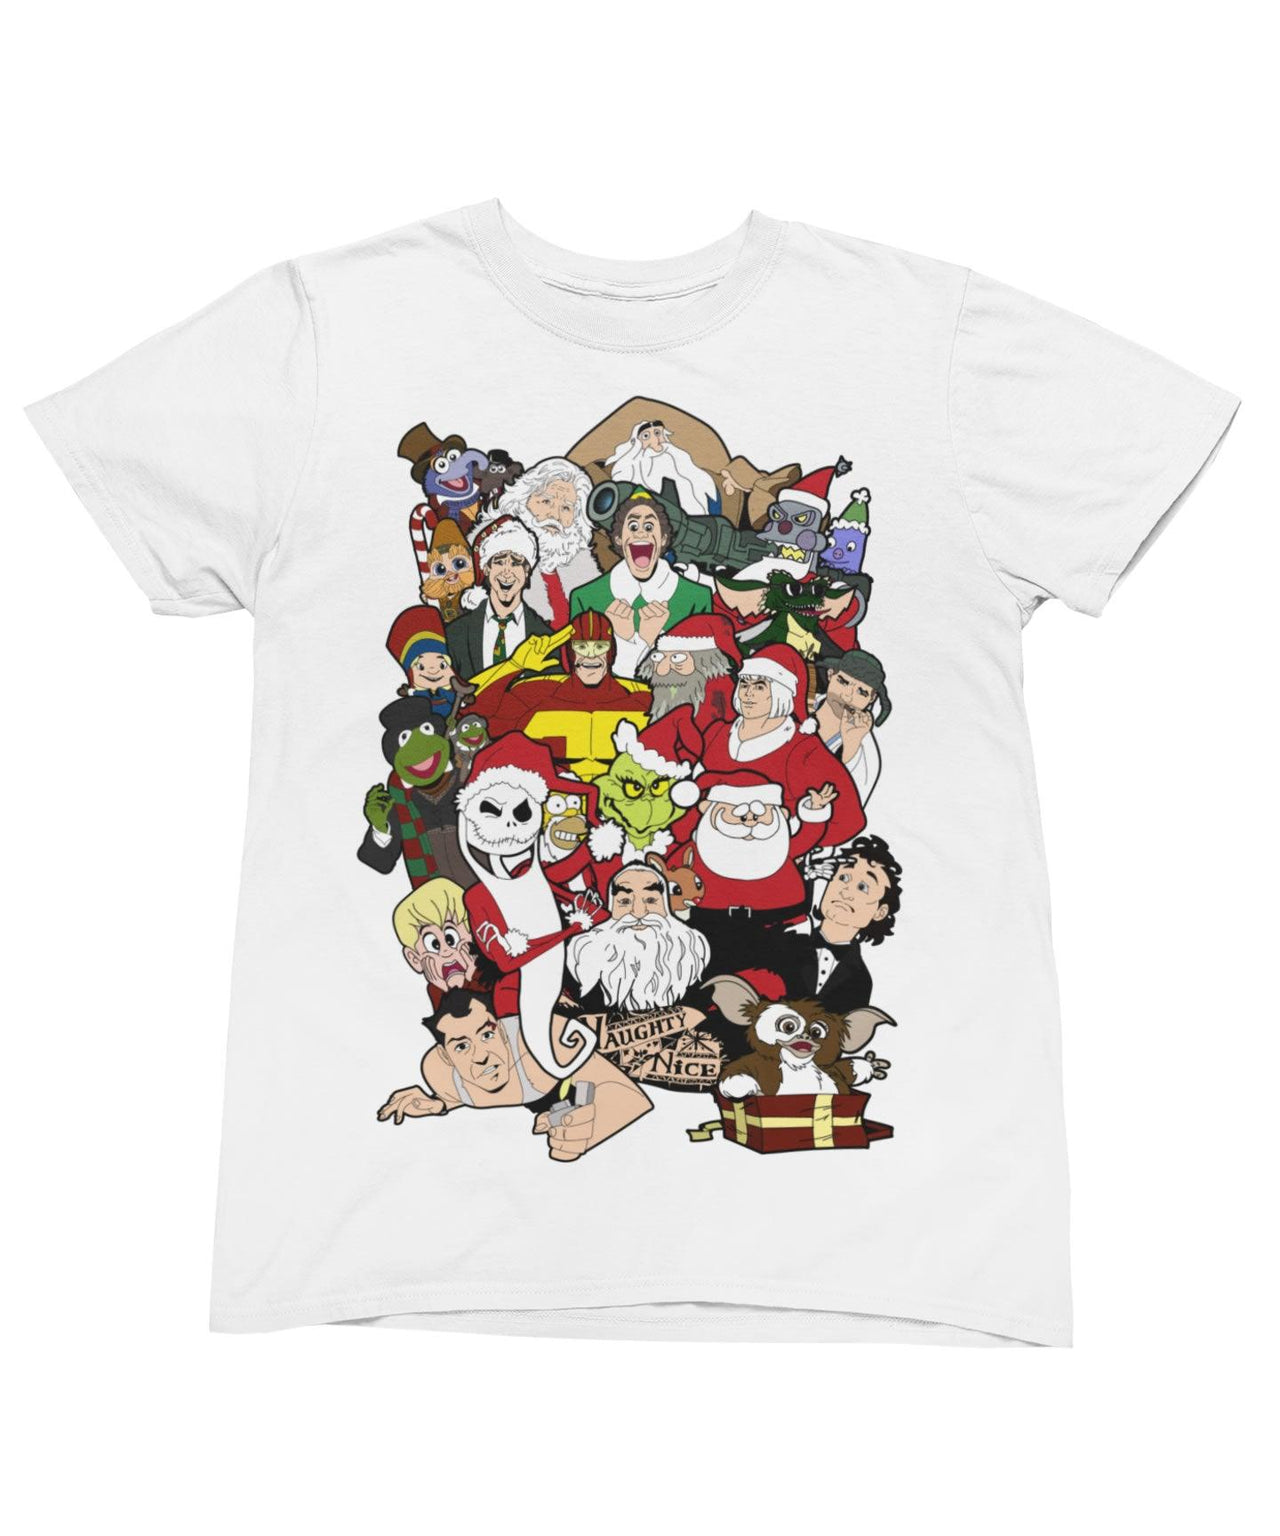 Christmas Chaos Unisex Christmas Mens T-Shirt 8Ball